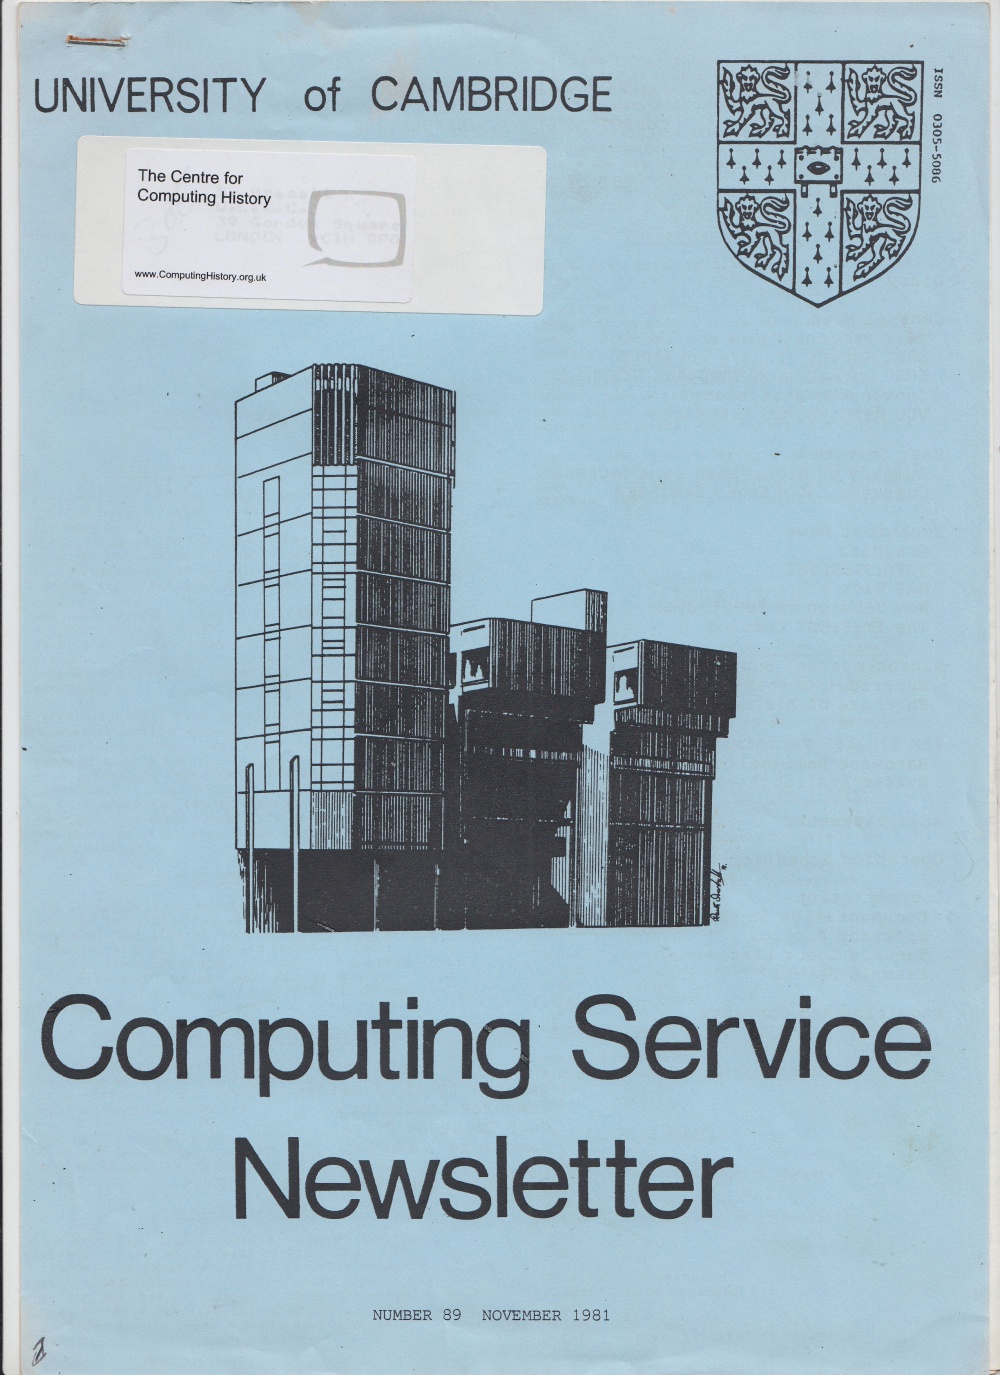 Article: University of Cambridge Computing Service November 1981 Newsletter 89